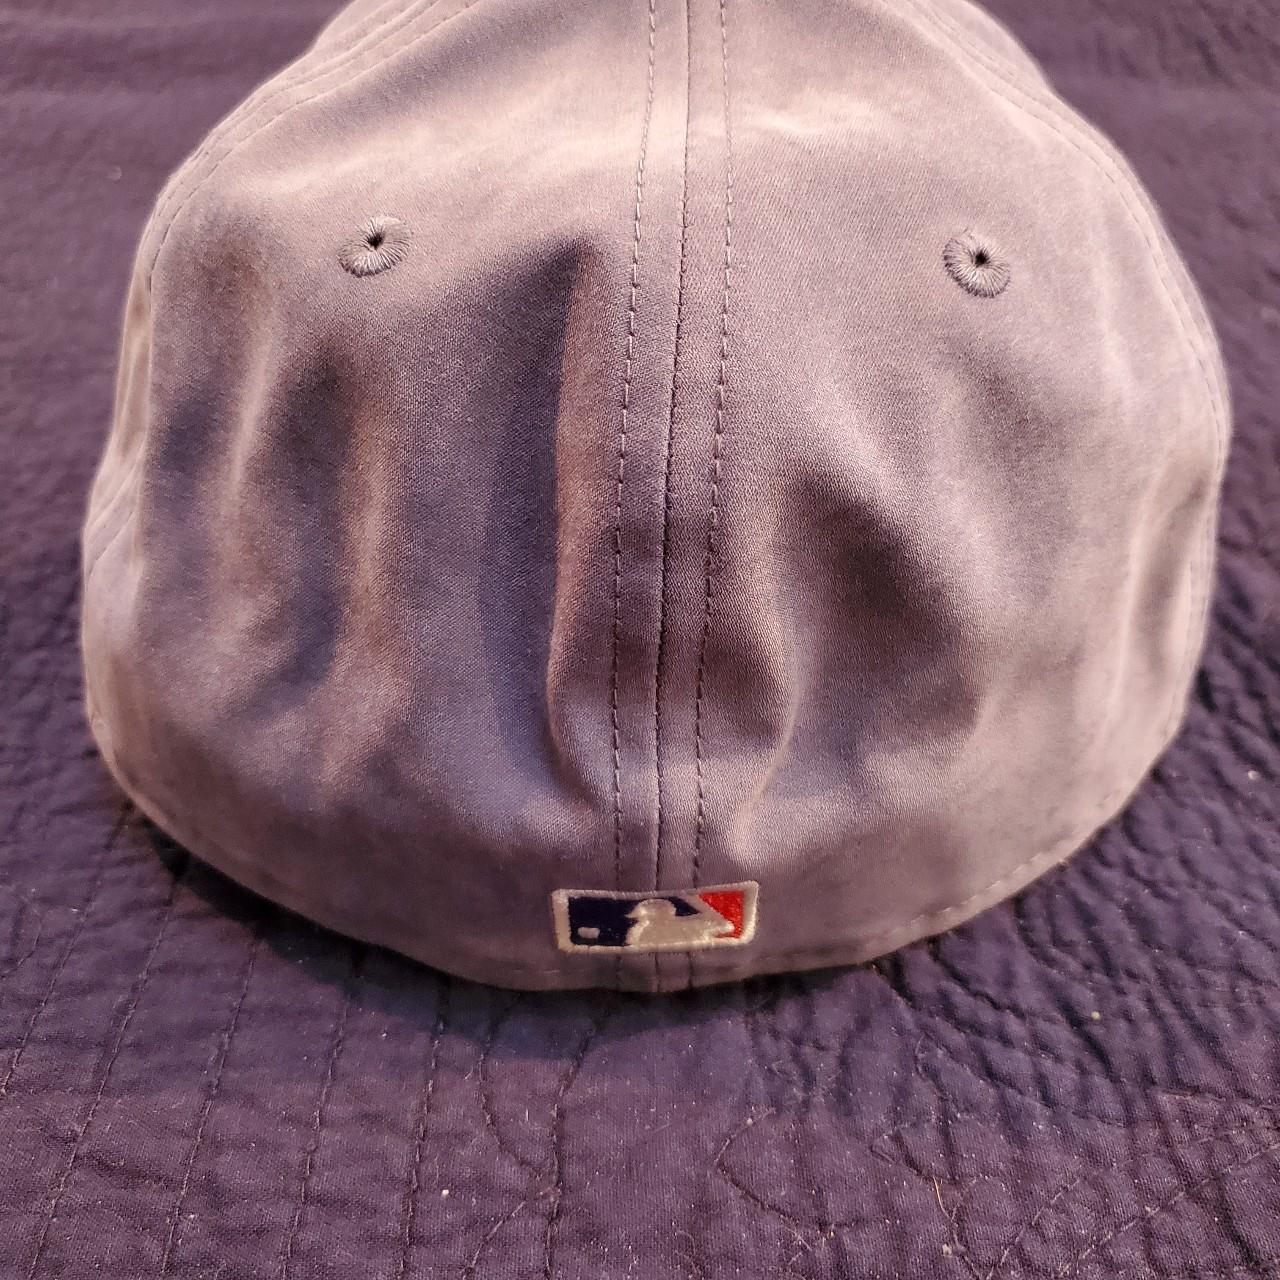 Aime Leon Dore Brushed Nylon Mets New Era hat...